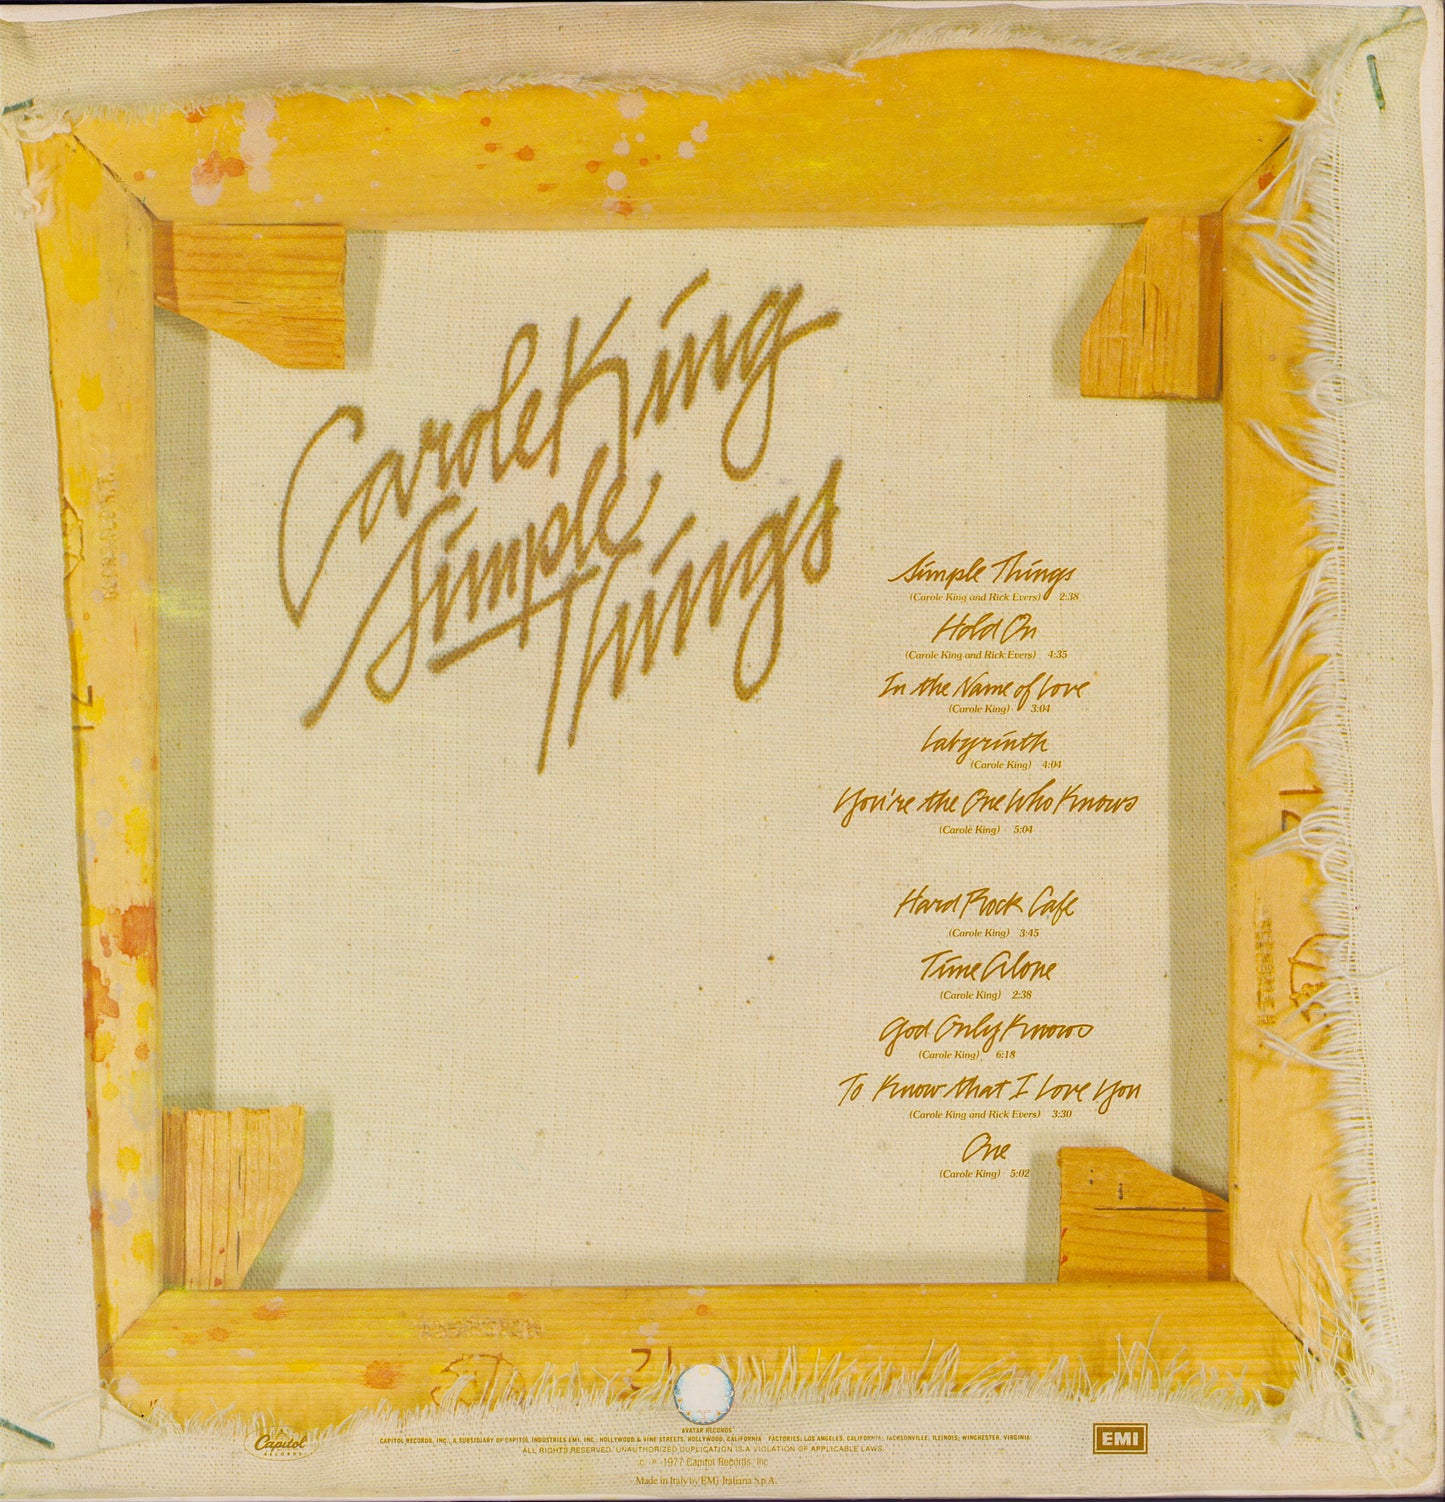 Carole King ‎- Simple Things